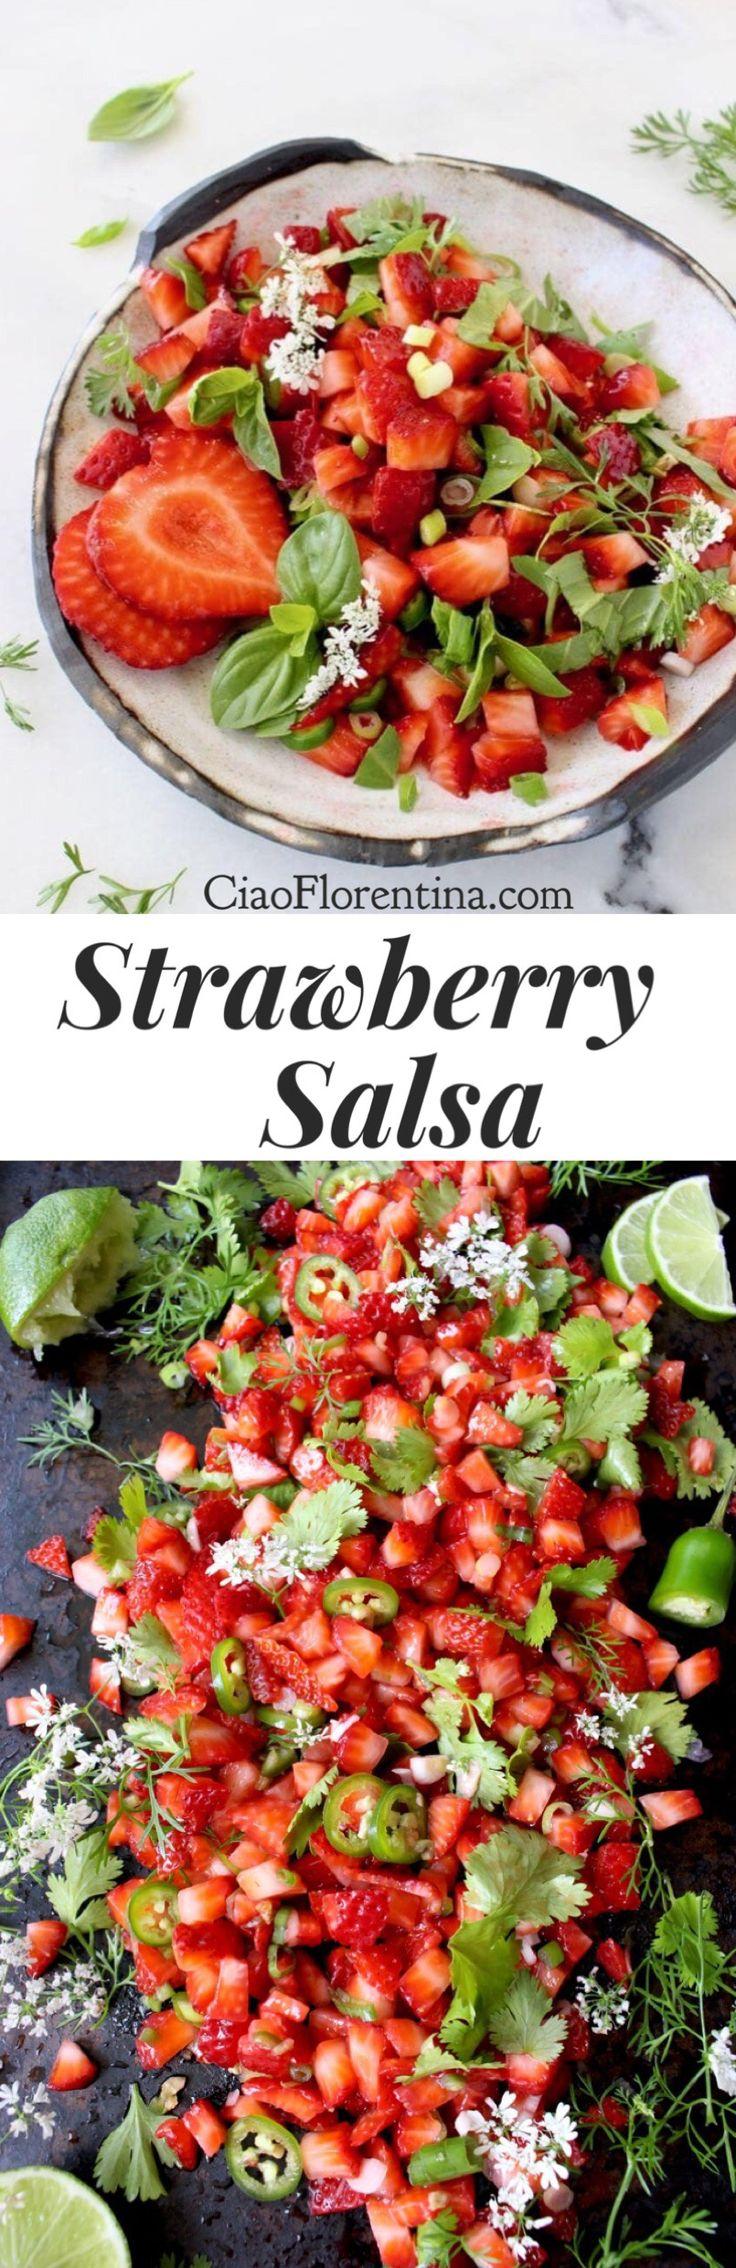 Wedding - Strawberry Salsa